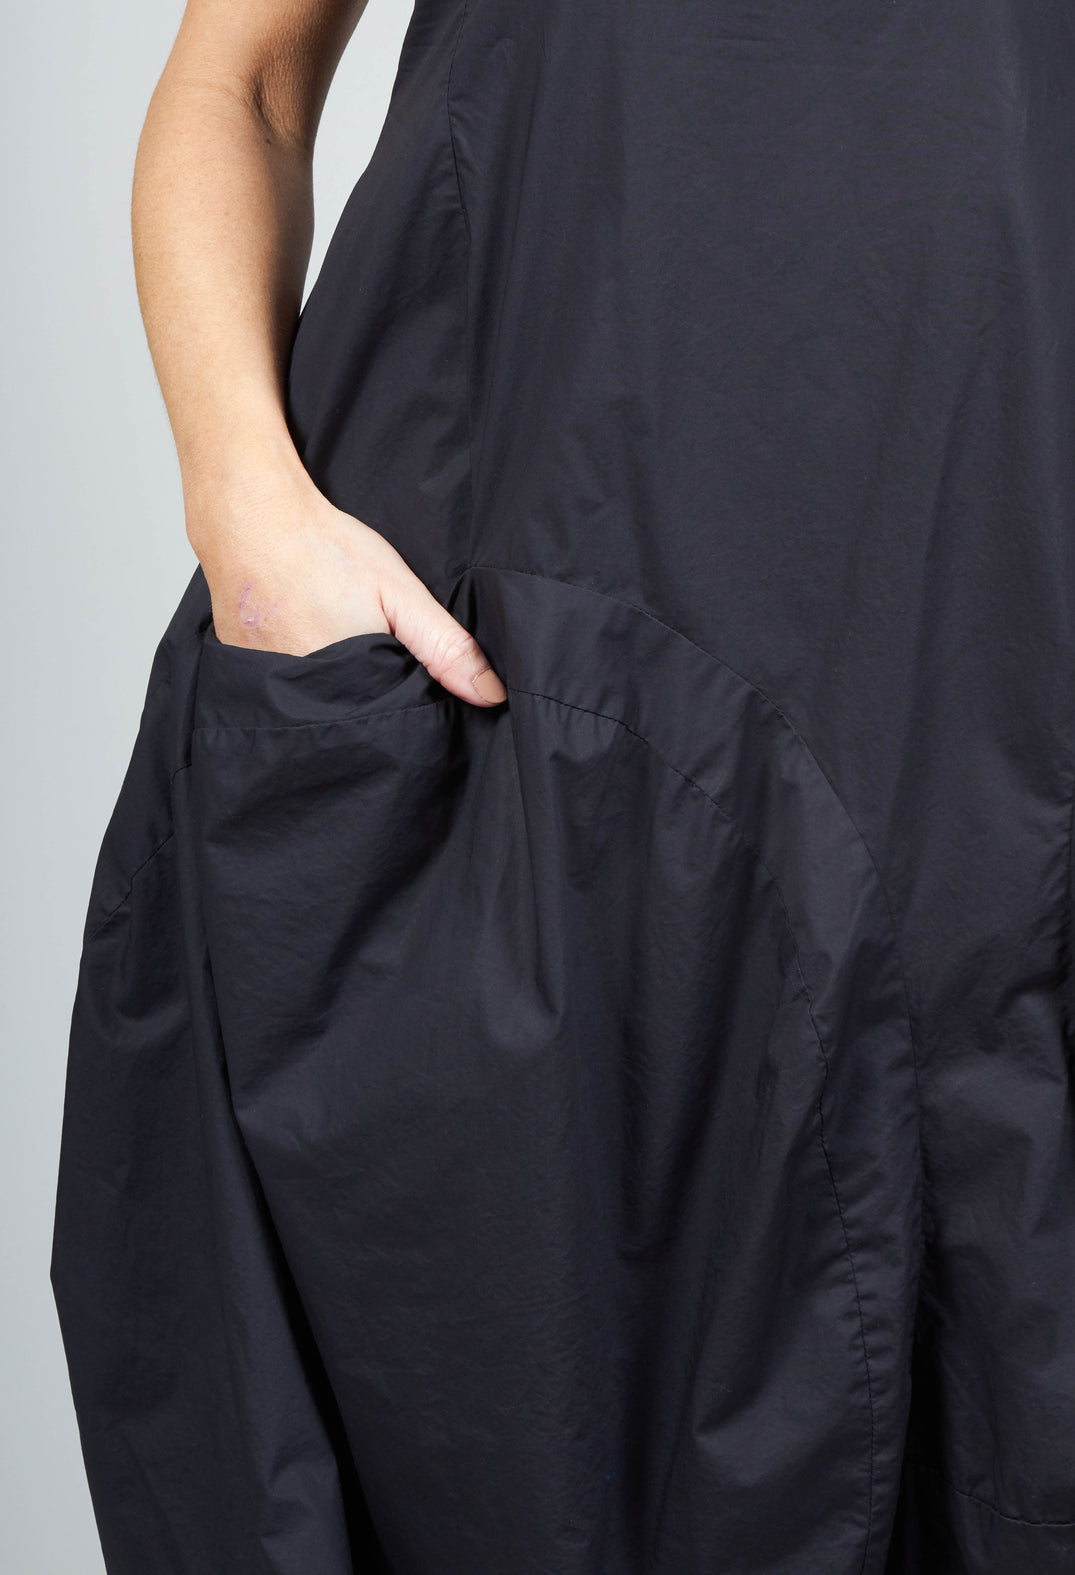 Tulip Hem Dress with Large Pockets in Black